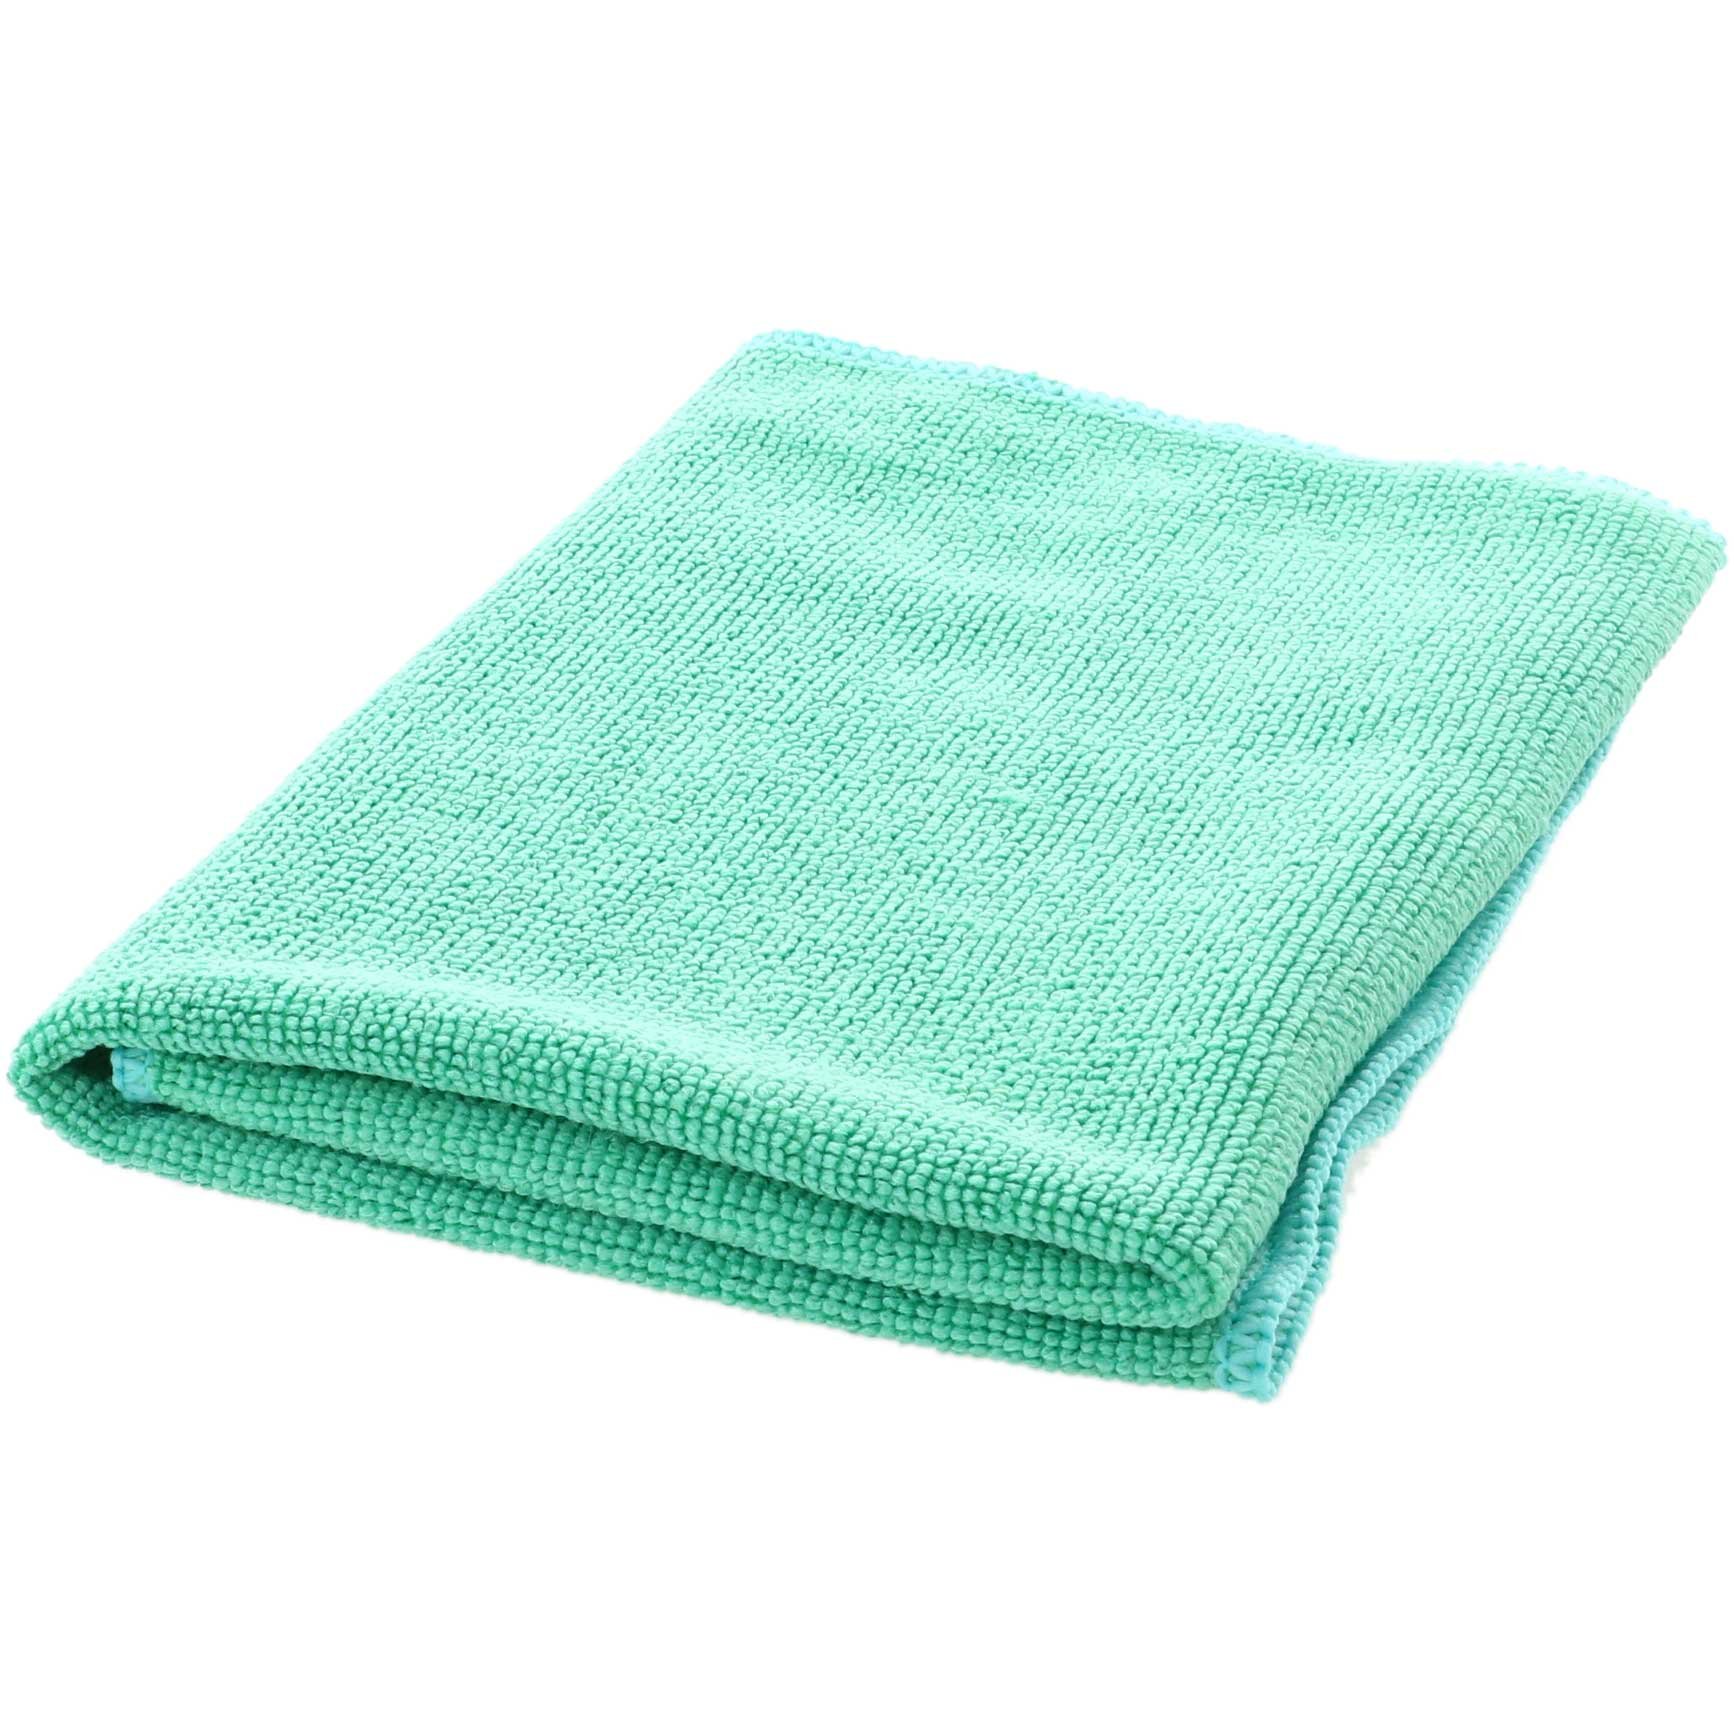 The Edgeless Pearl Ceramic Coating Towel Green - 41x41cm